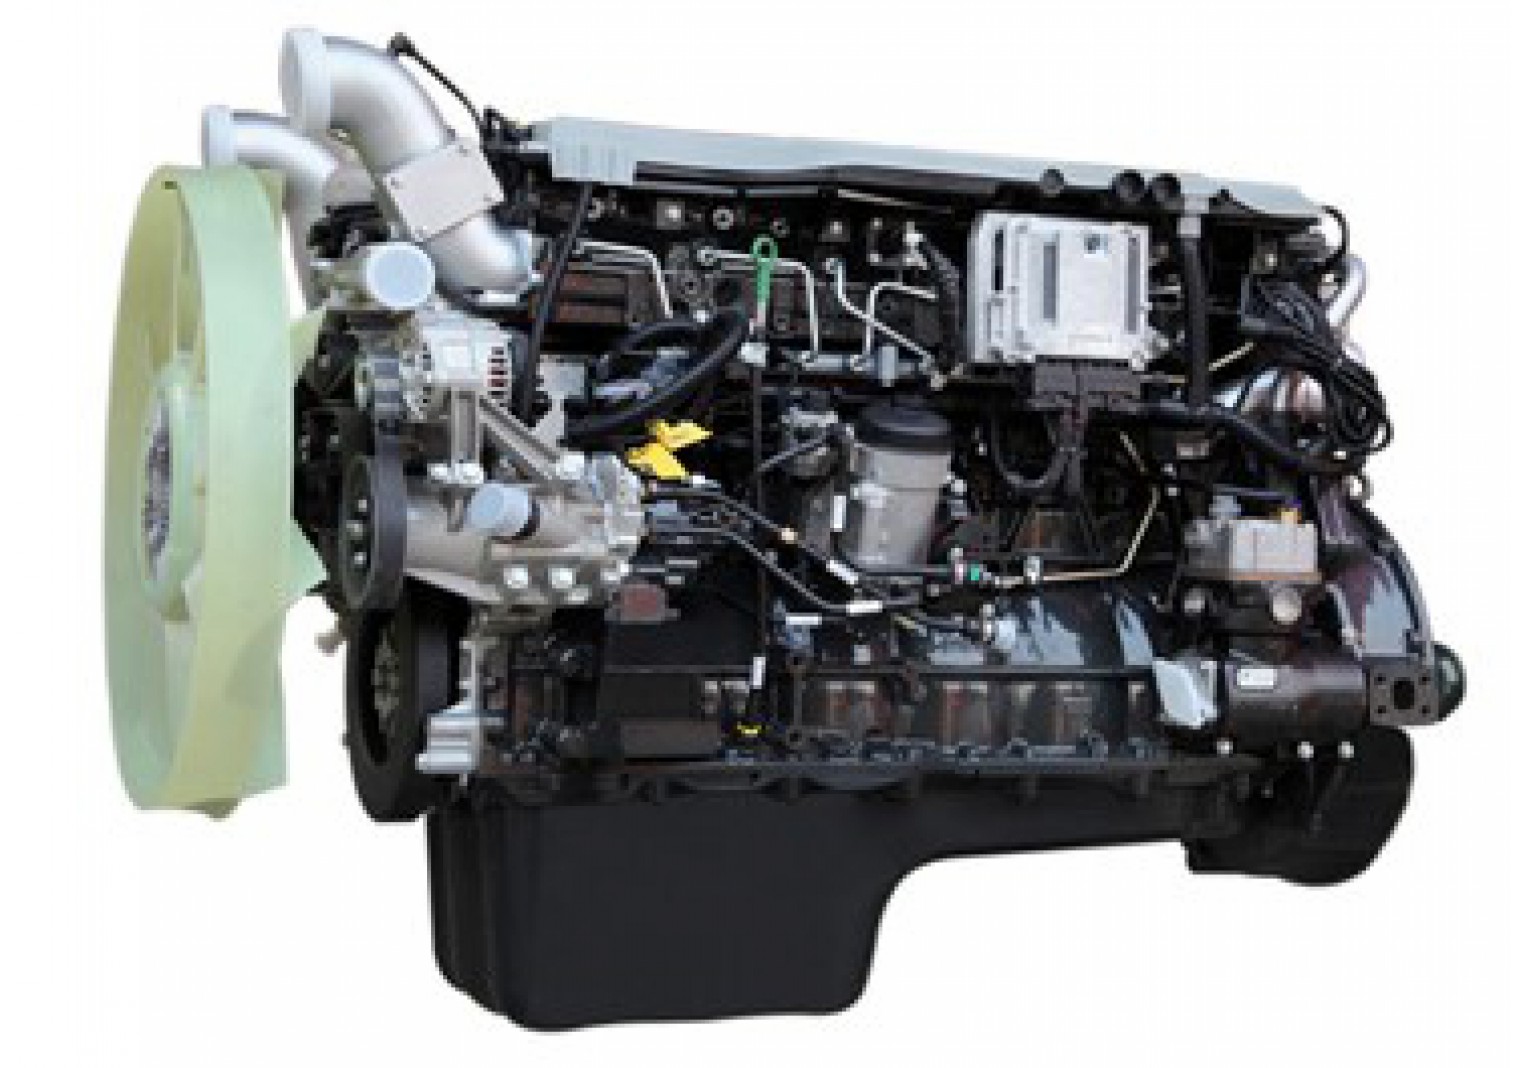 Construction Diesel Engine MC11.44